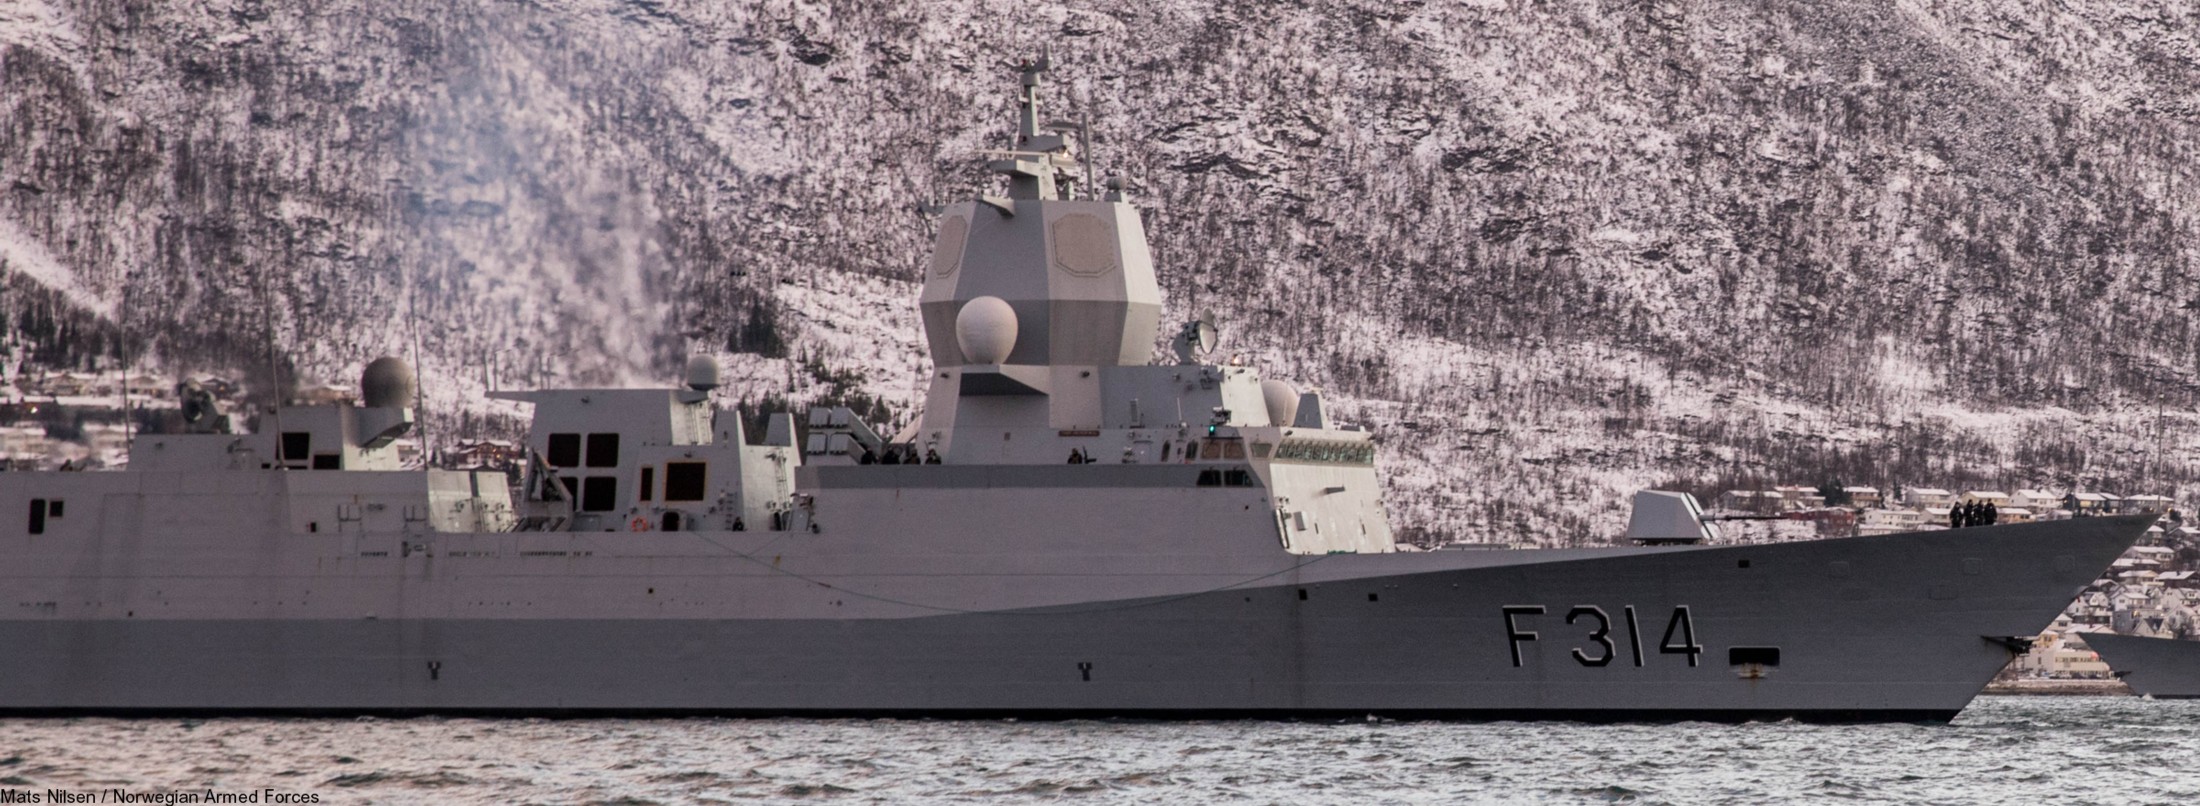 f-314 thor heyerdahl hnoms knm fridtjof nansen class frigate royal norwegian navy 14